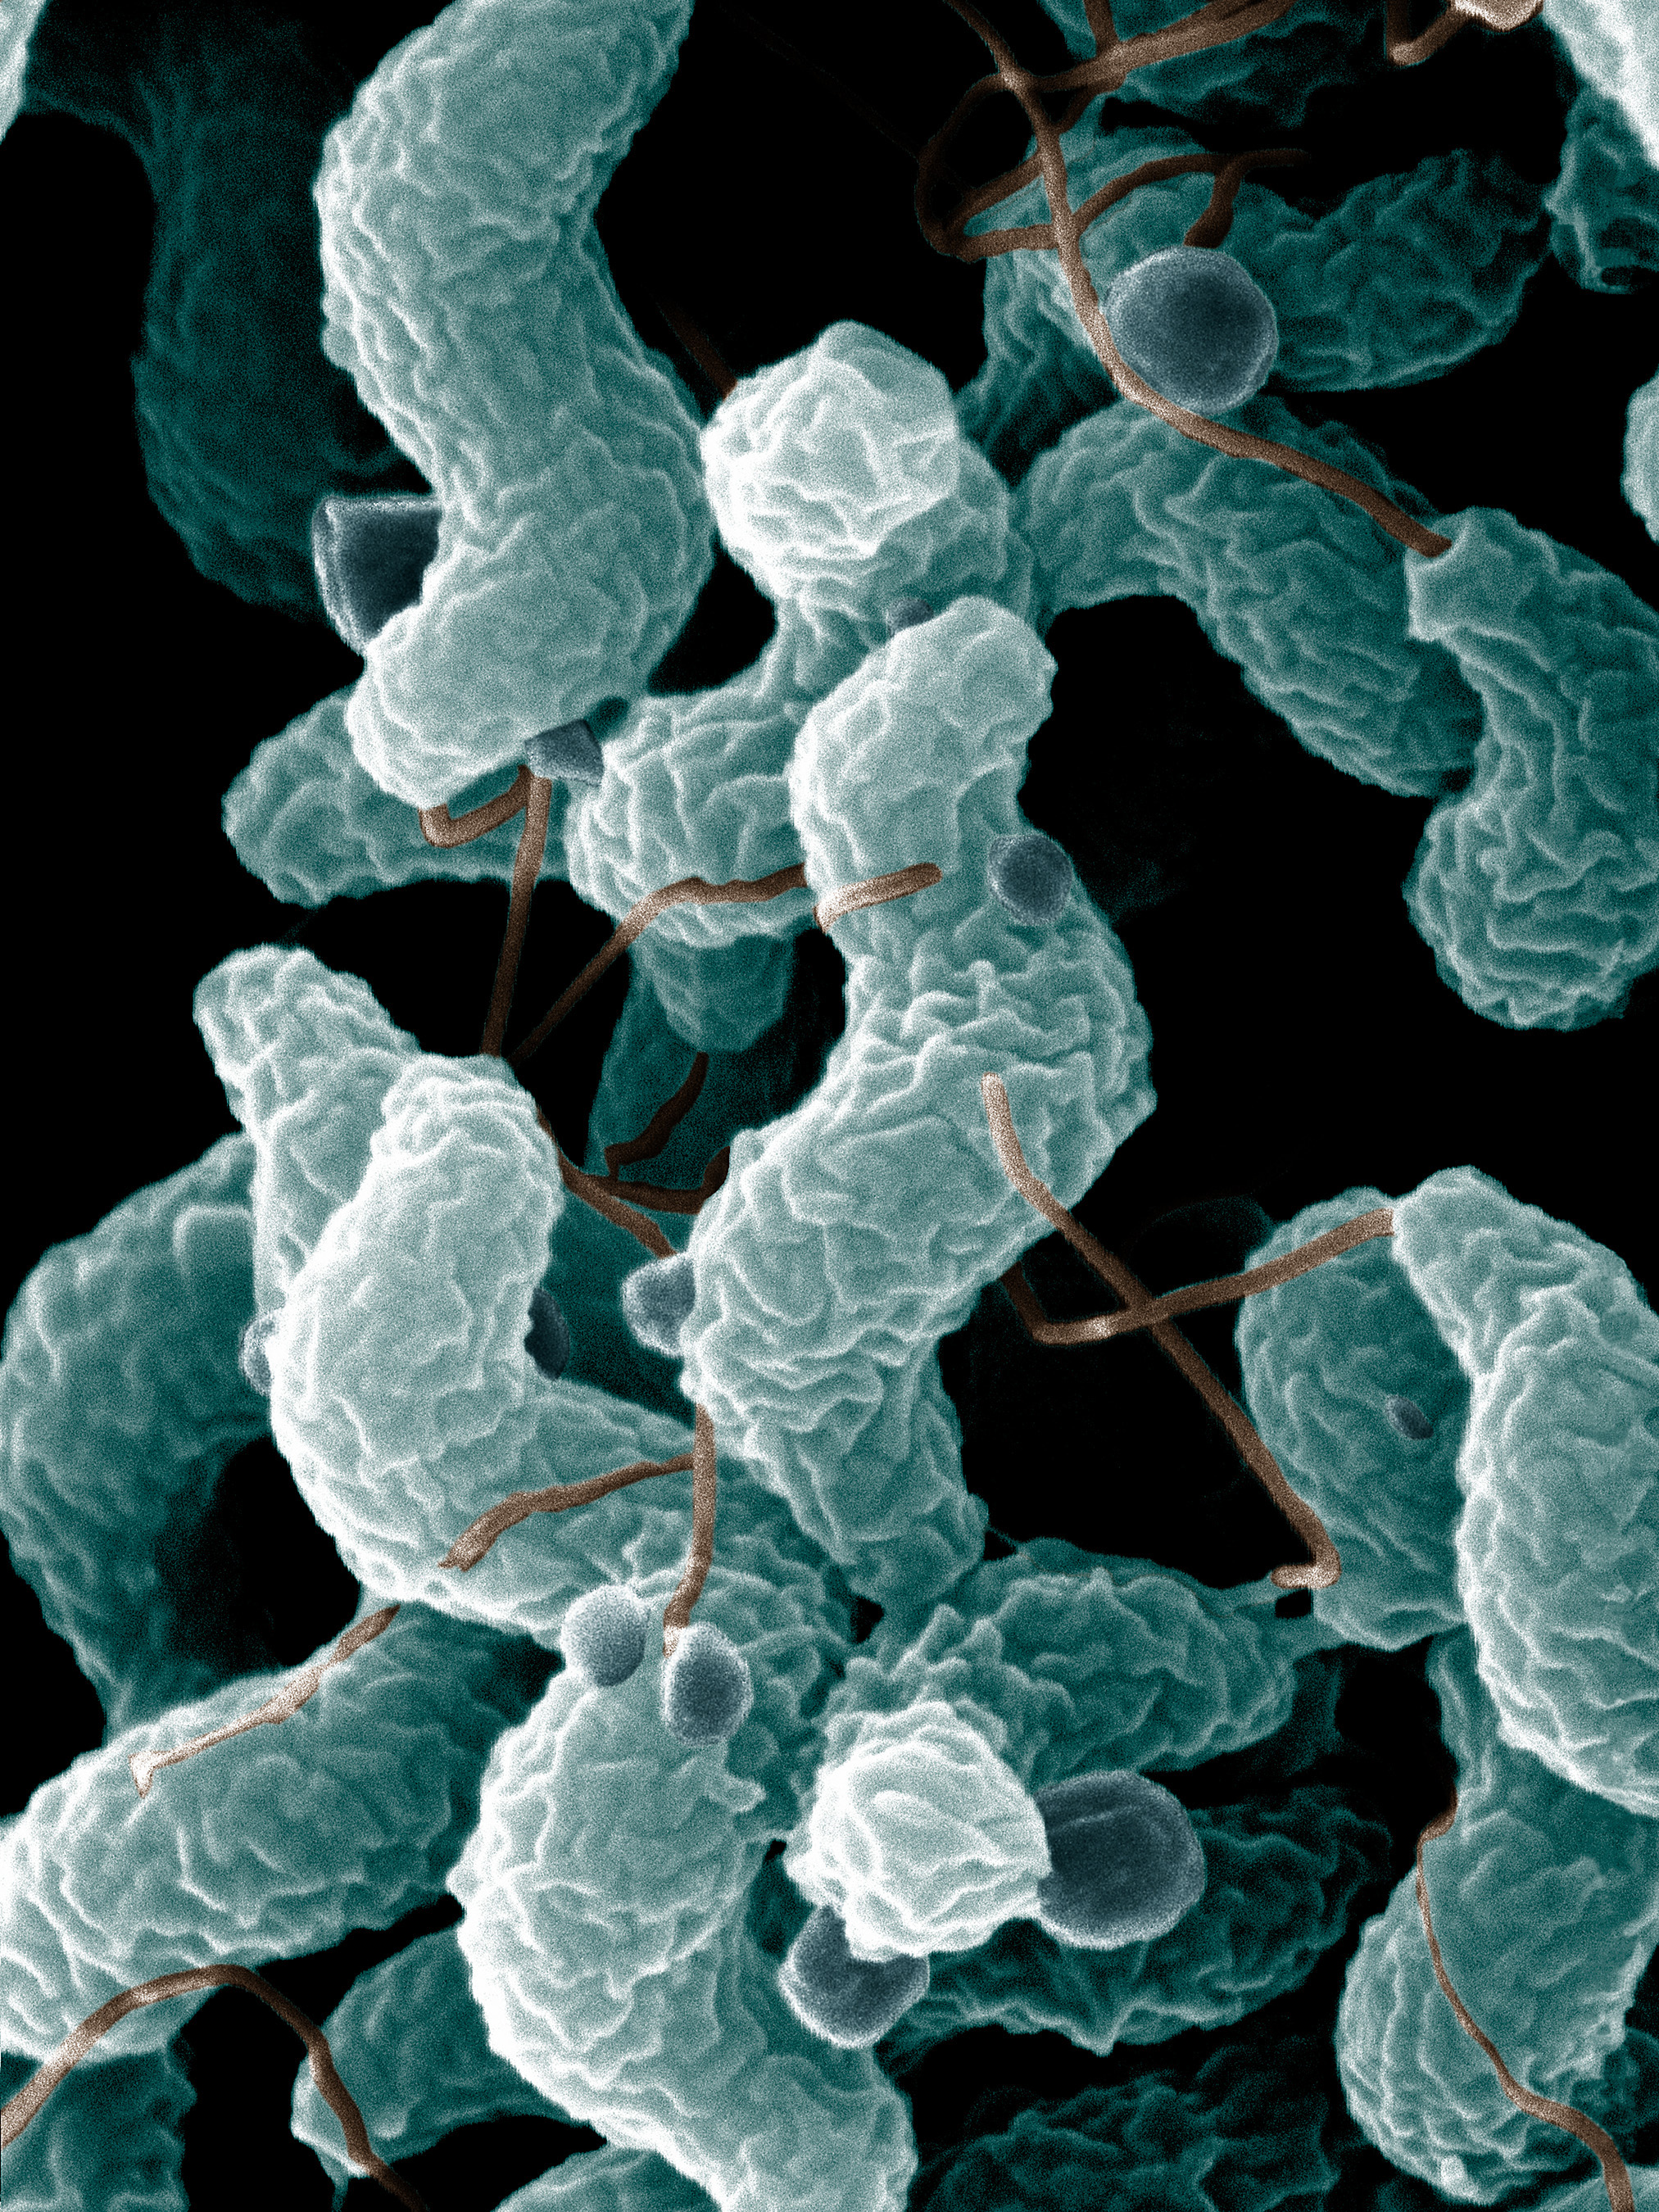 File:ARS Campylobacter jejuni.jpg - Wikimedia Commons